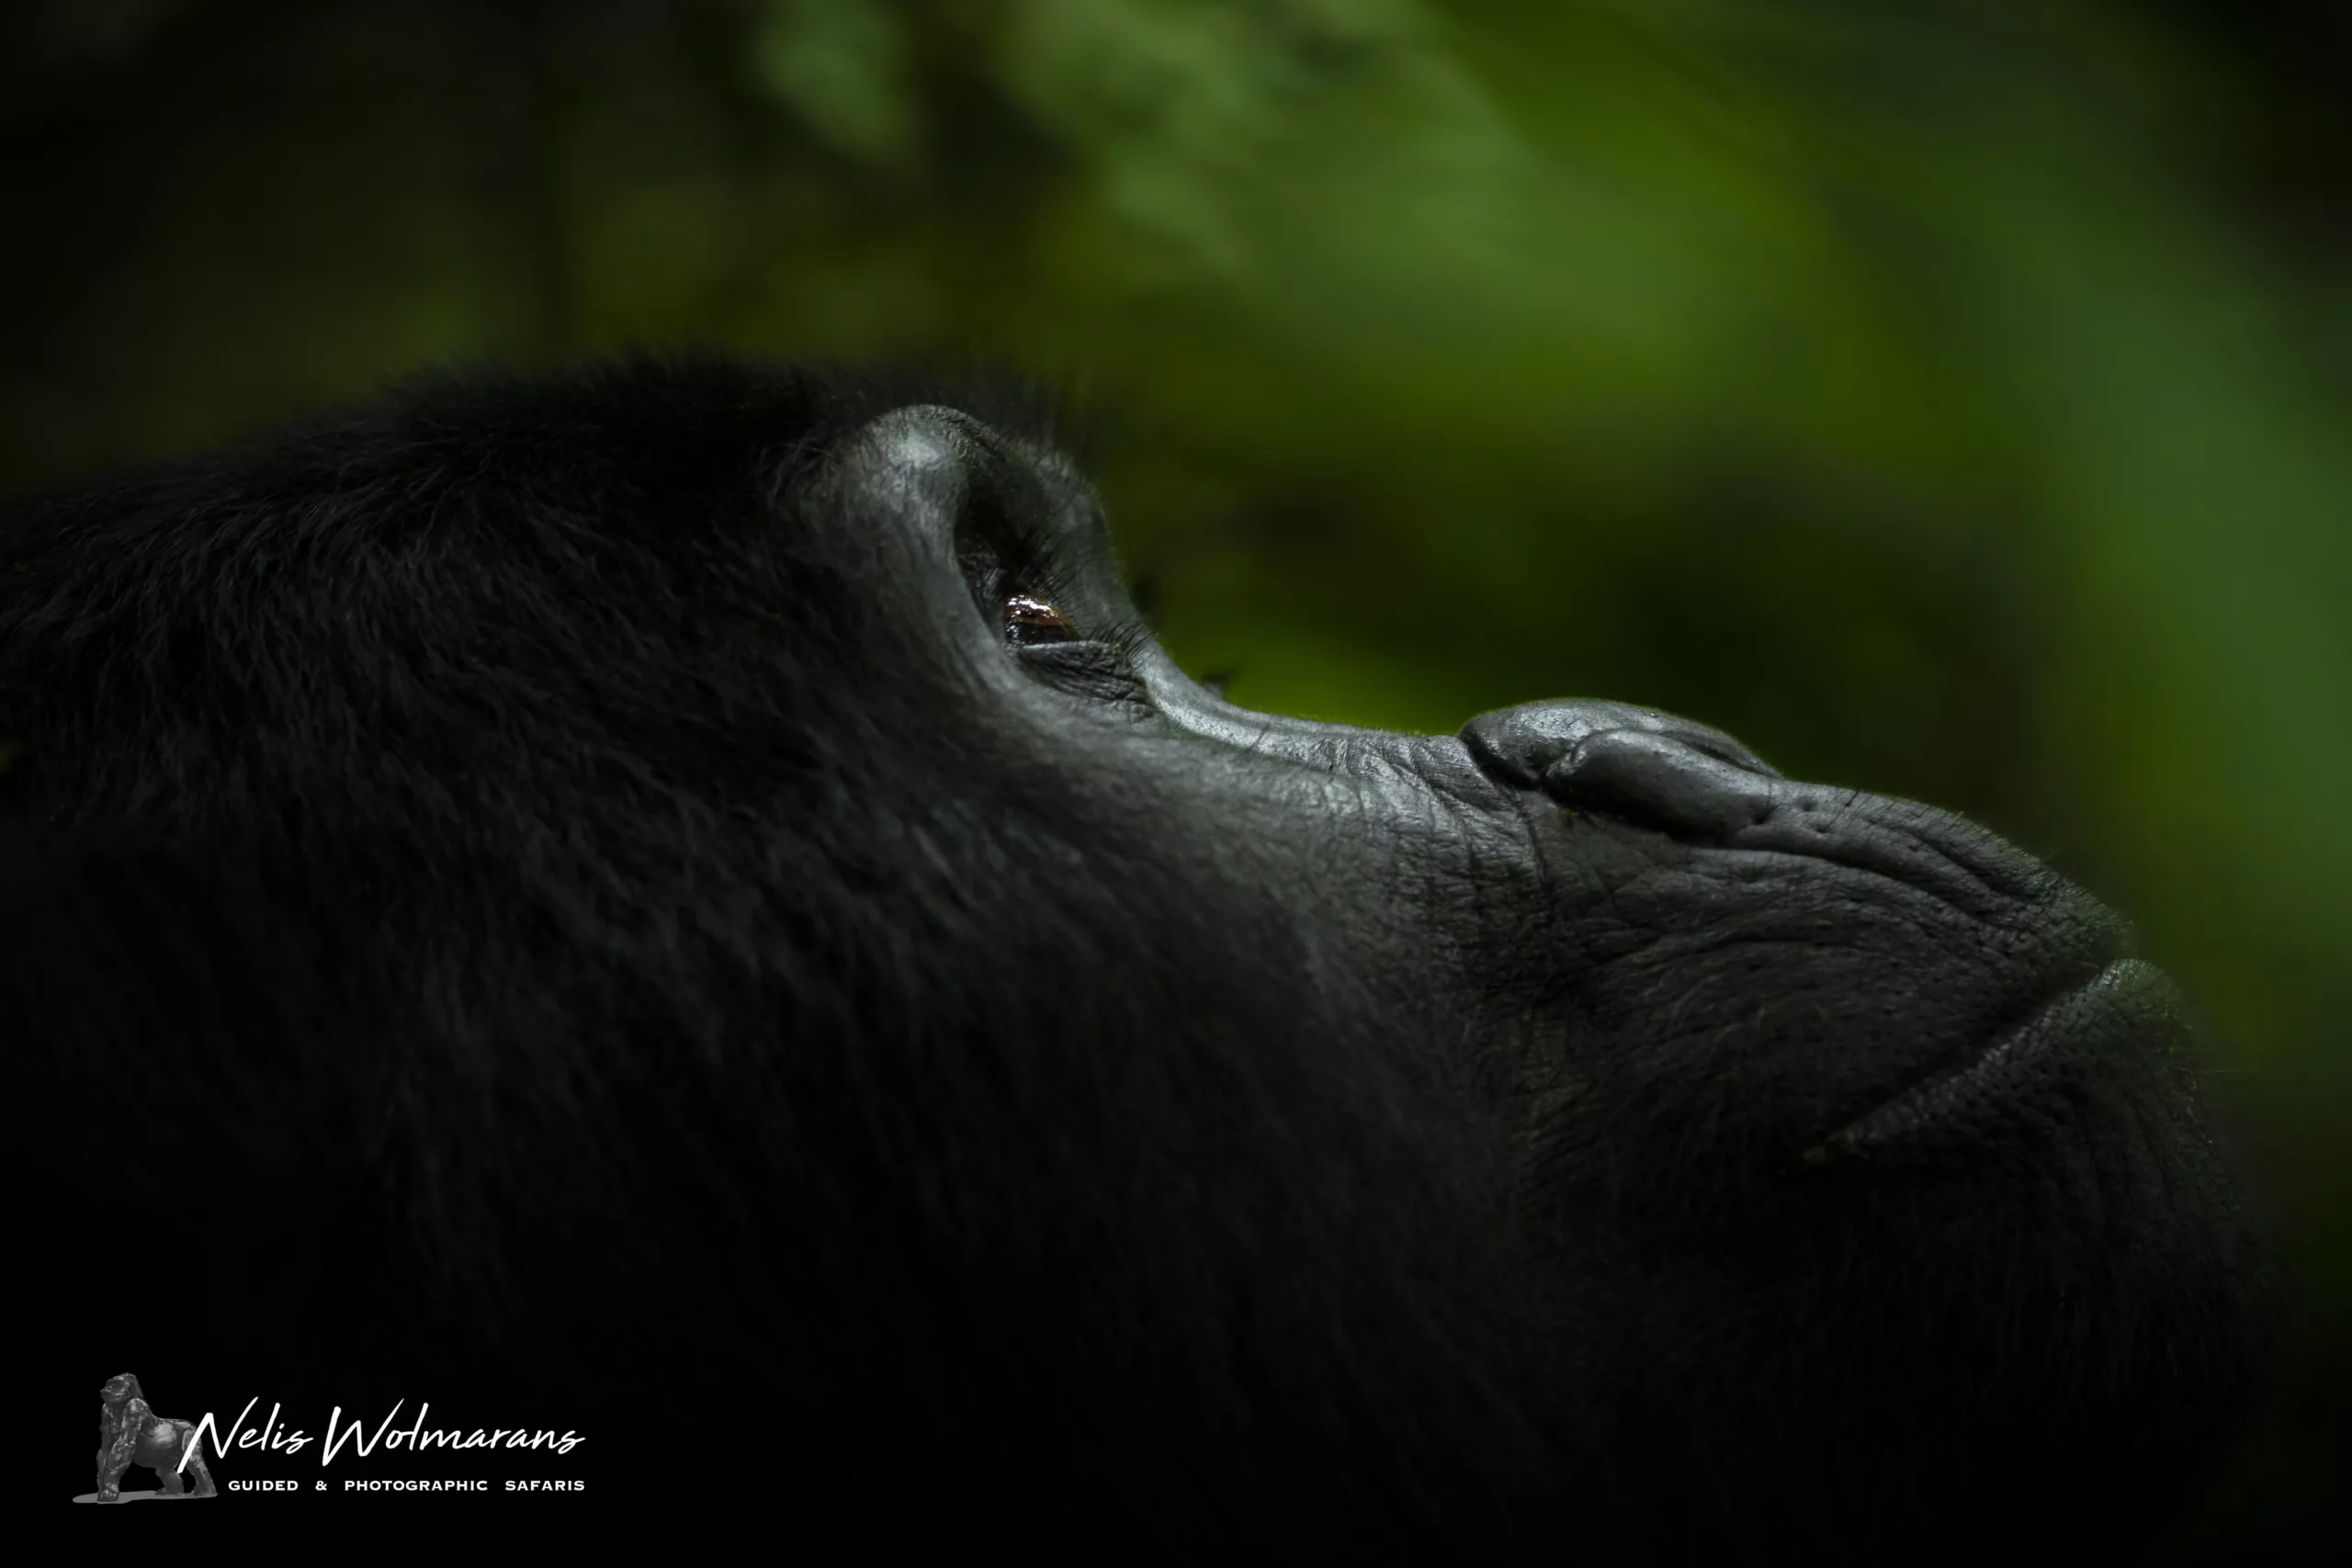 Uganda primate safari nelis wolmarans x pangolin thoughtful gorilla